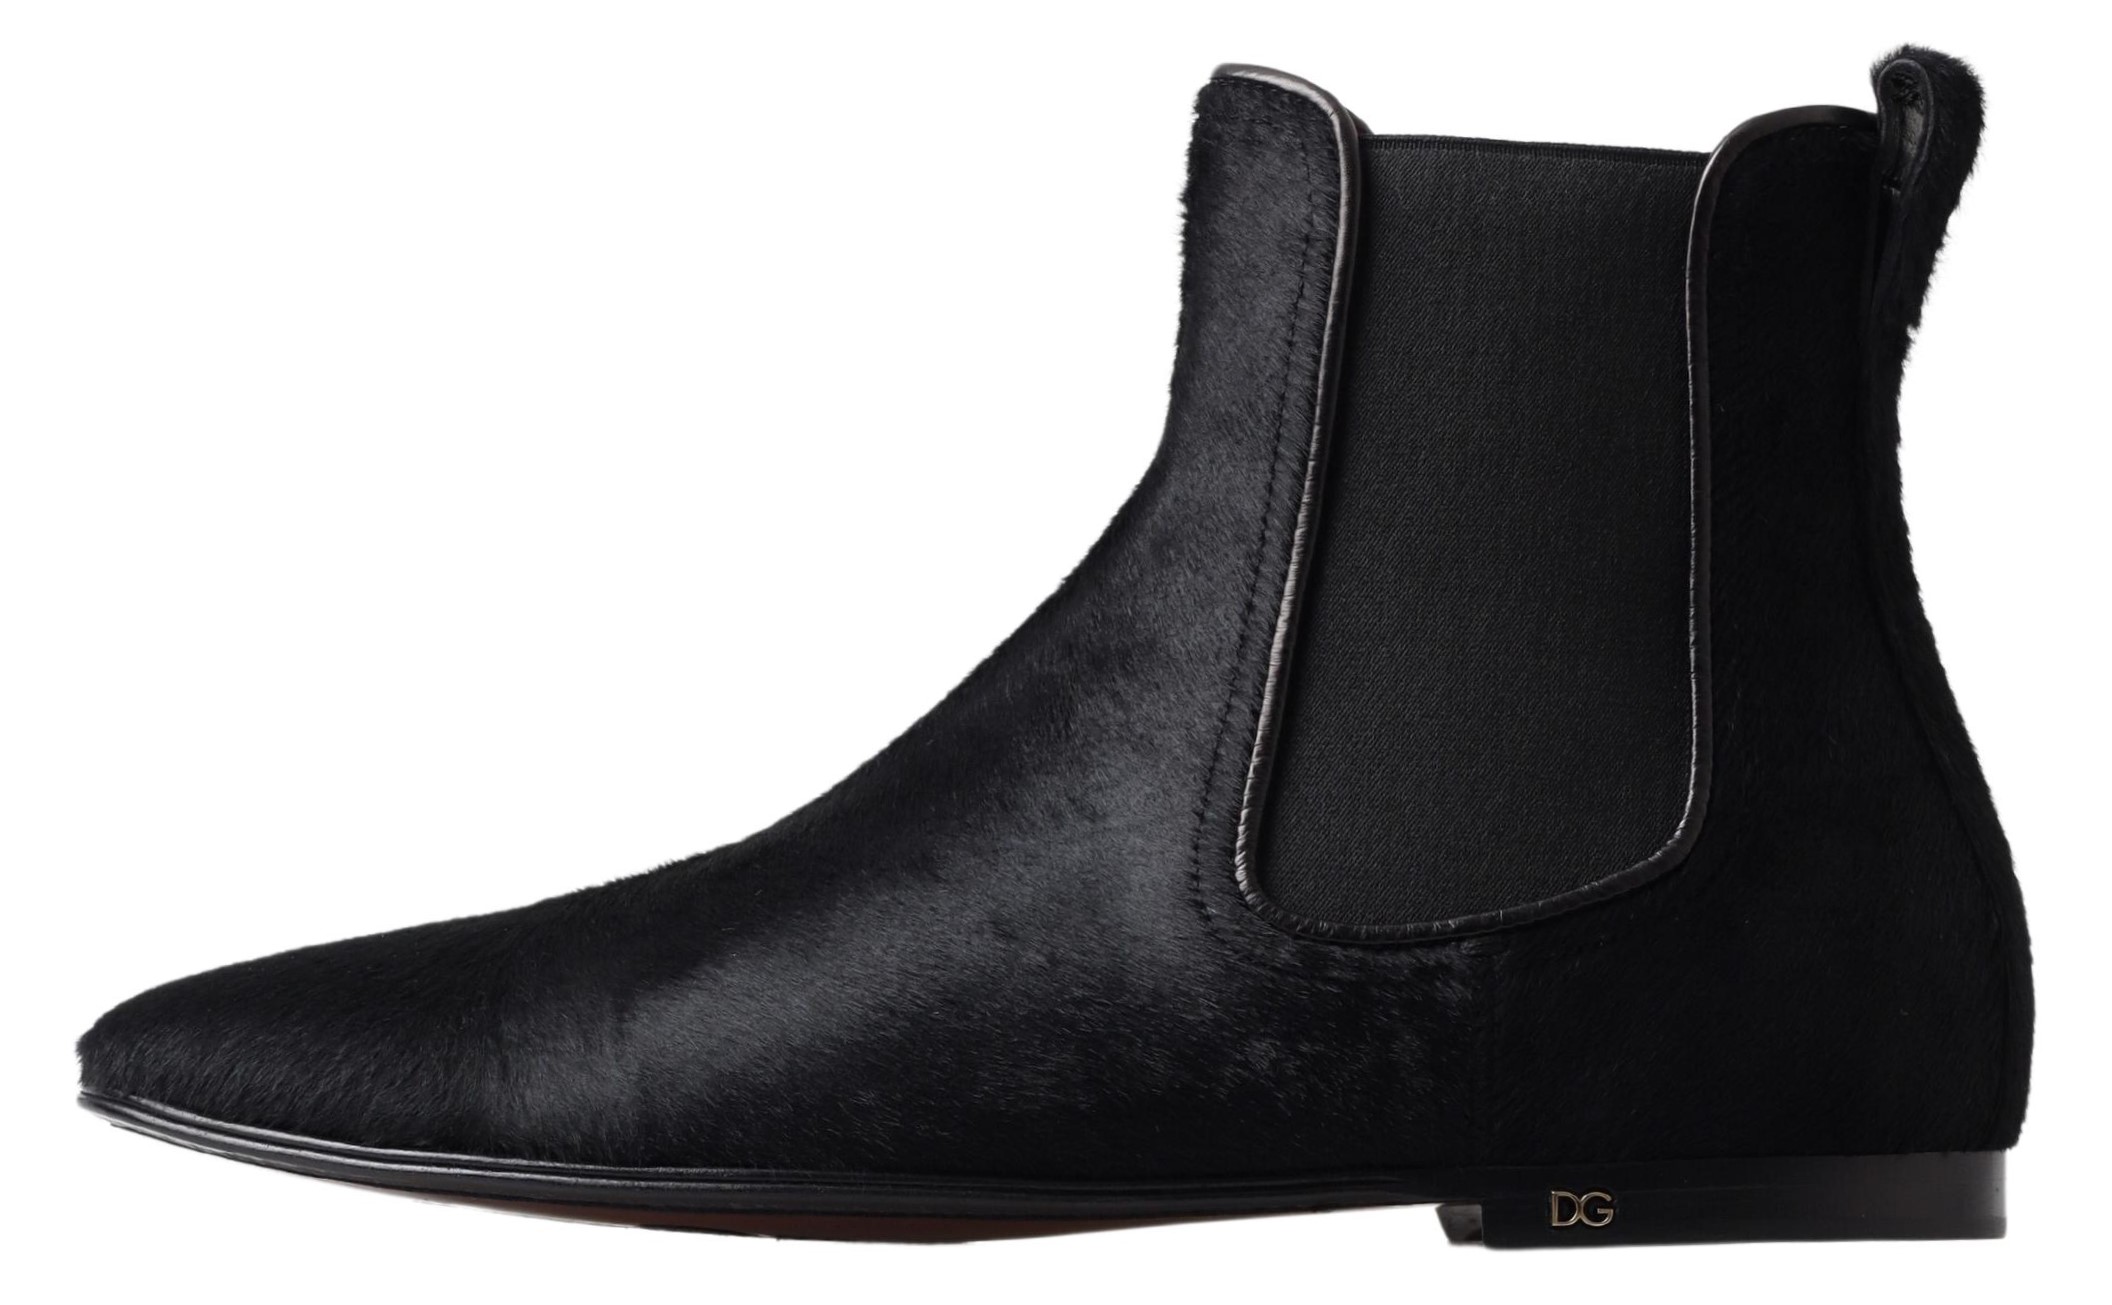 & Gabbana Black Leather Chelsea Men Ankle Boots Shoes Fashion Brands Outlet